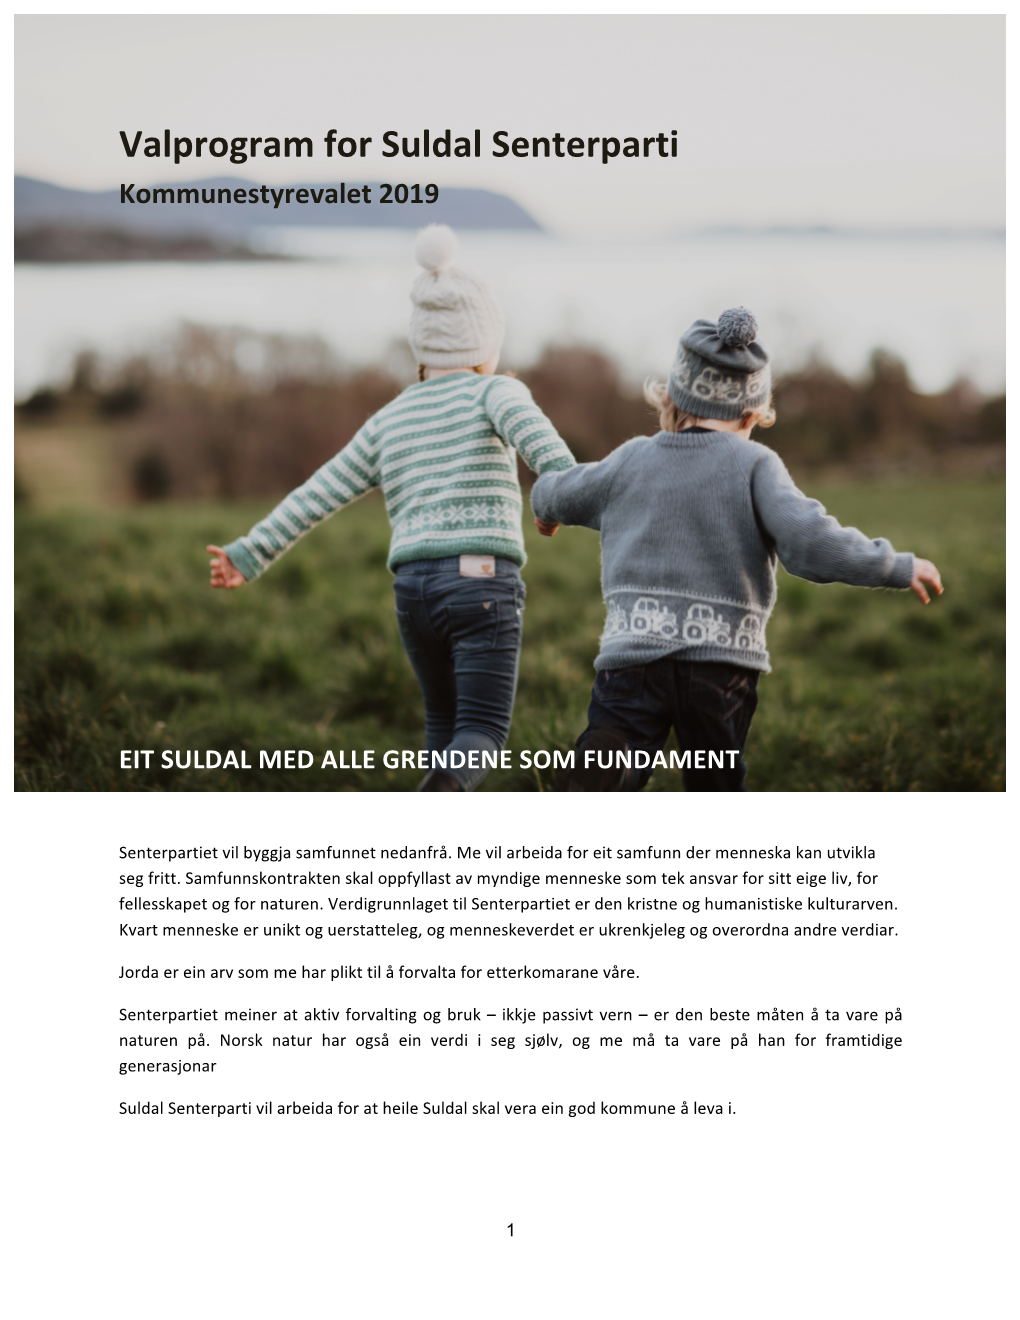 Valprogram for Suldal Senterparti Kommunestyrevalet 2019